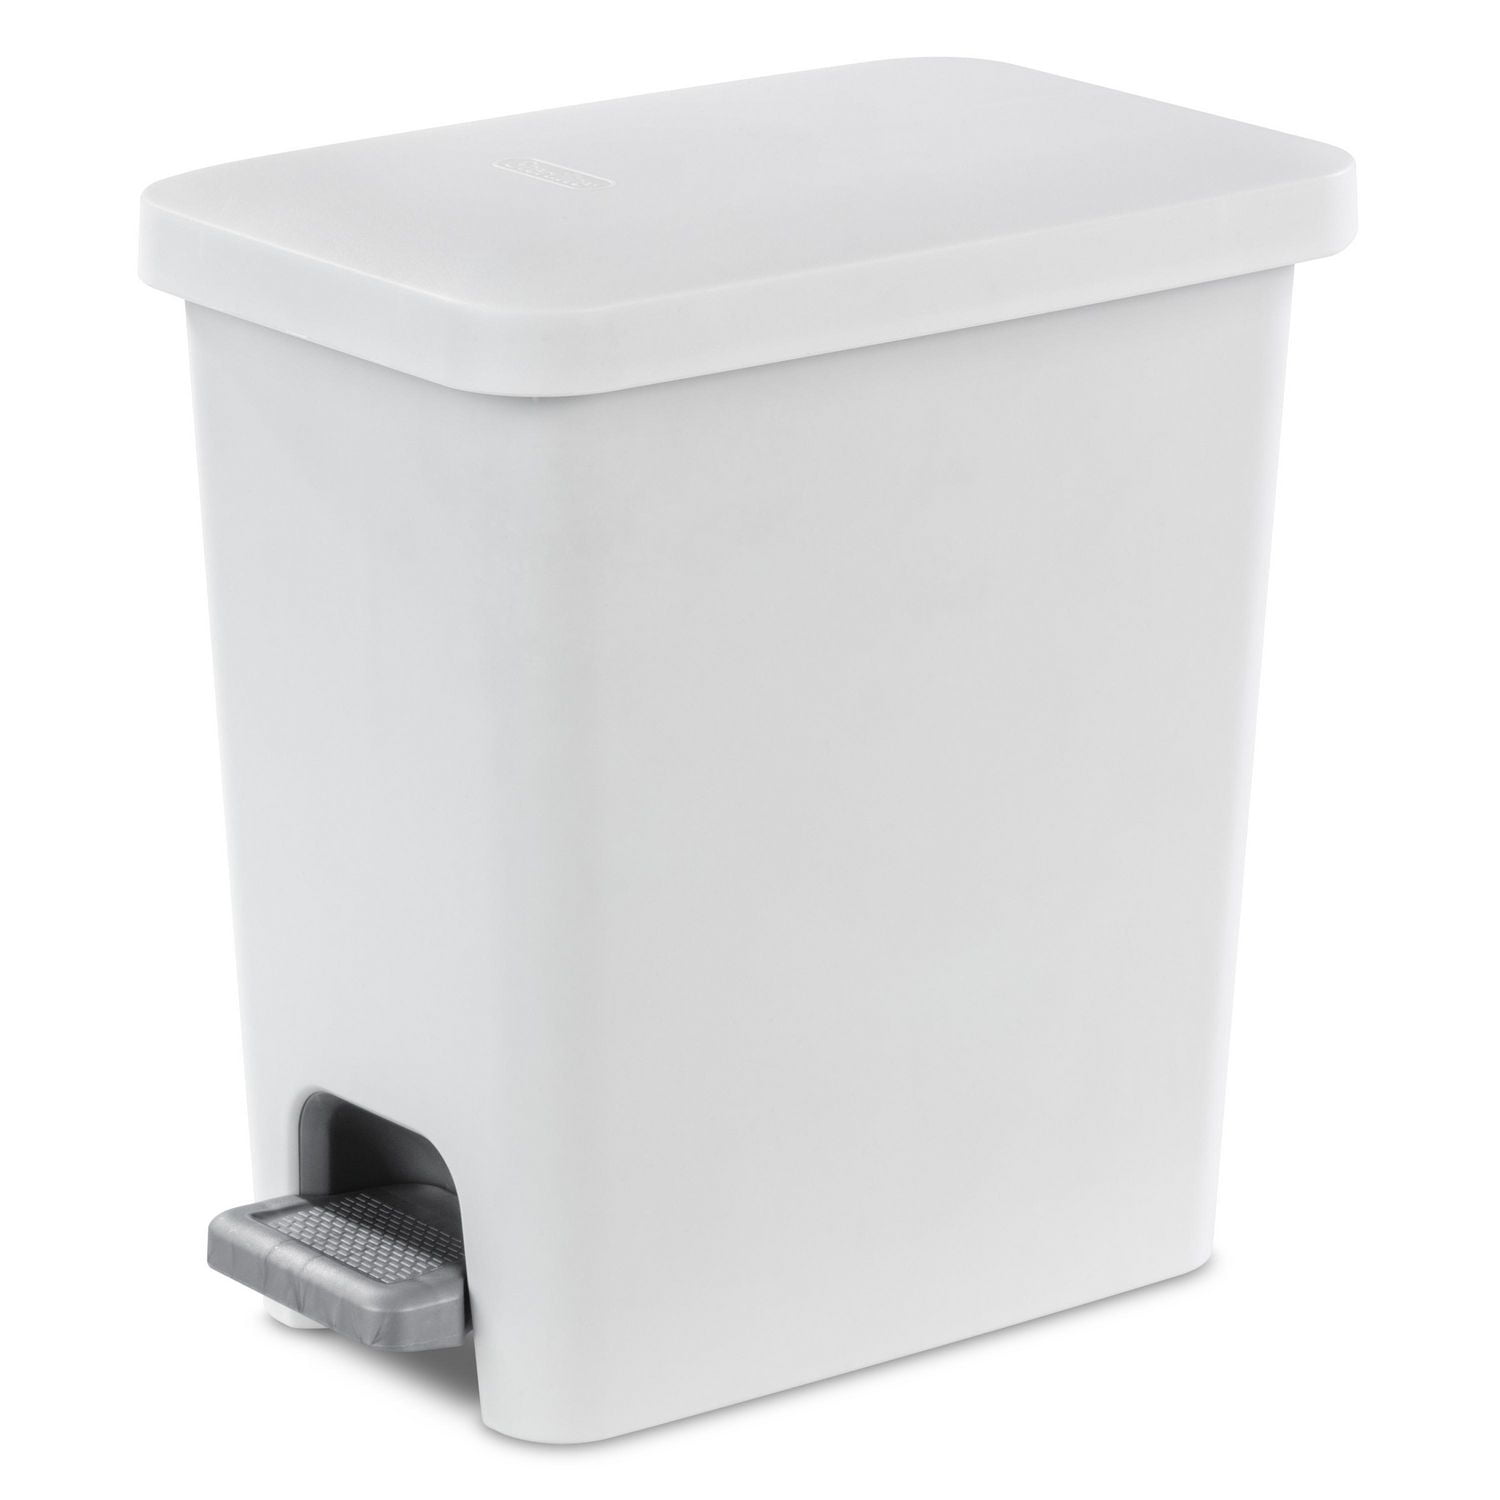 Sterilite 10.2 L Rectangular Step-on Wastebasket- White, 10.2 L 